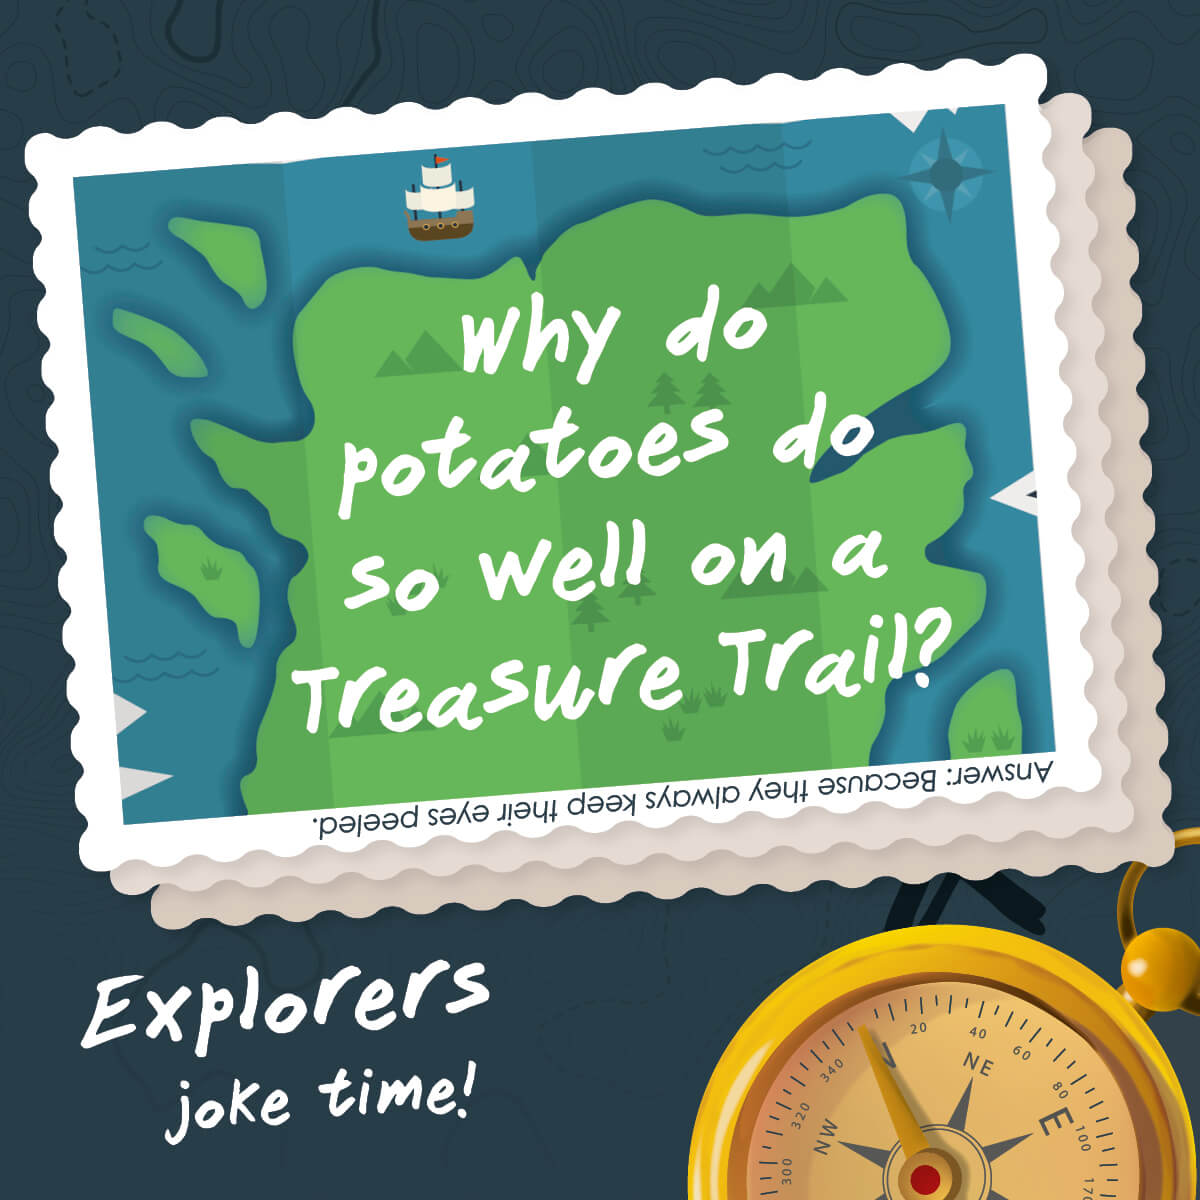 Treasure Trails joke time